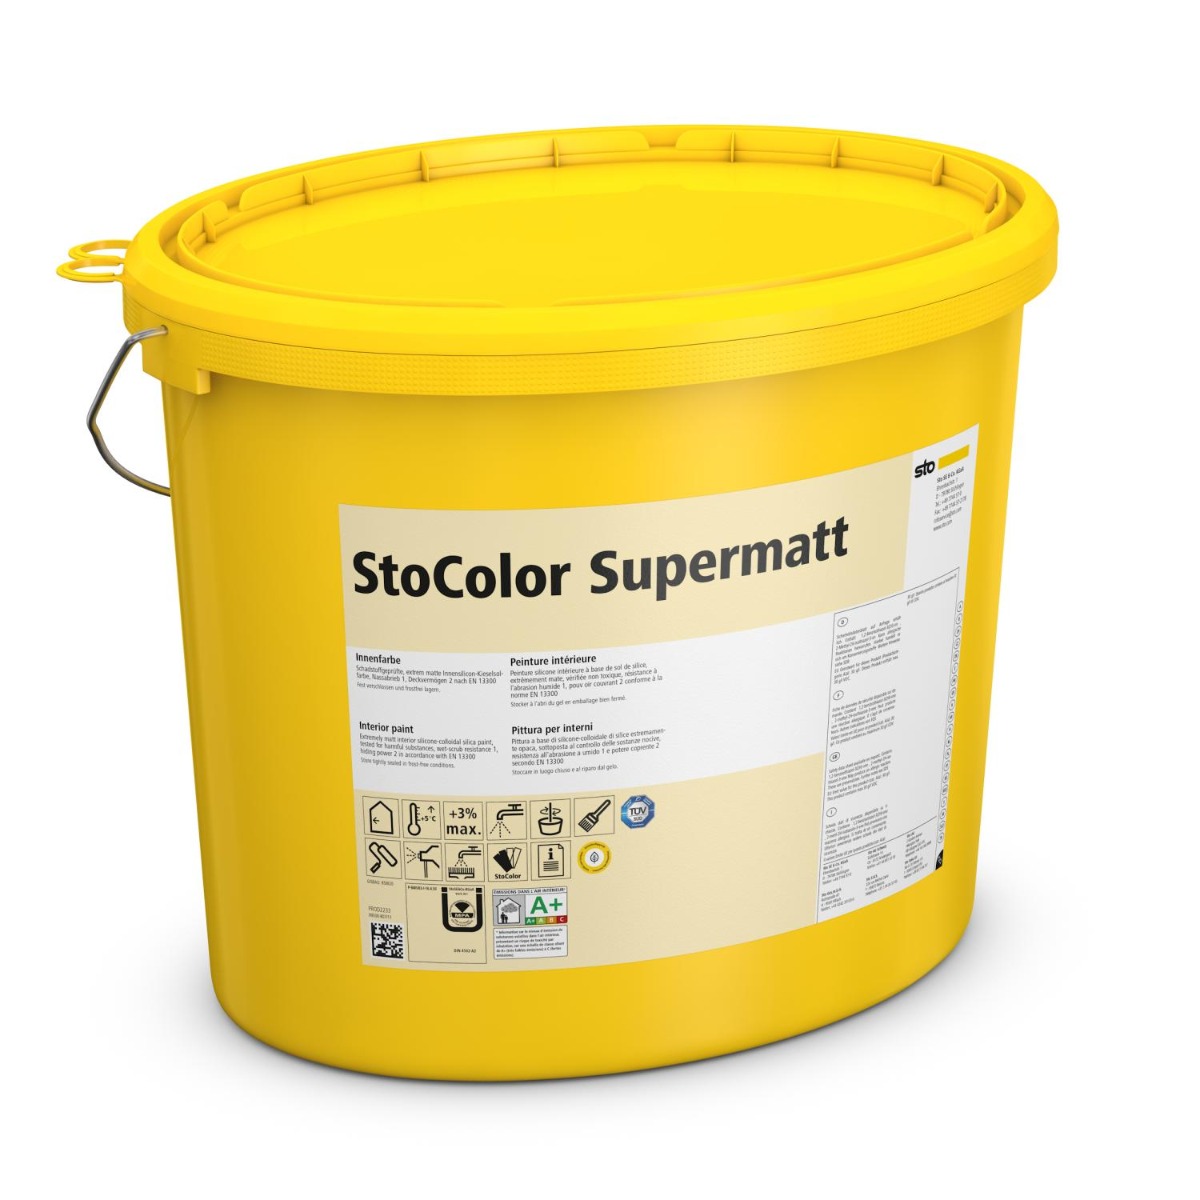 StoColor Supermatt-Farbtonklasse II 5 Liter-5 Liter Eimer